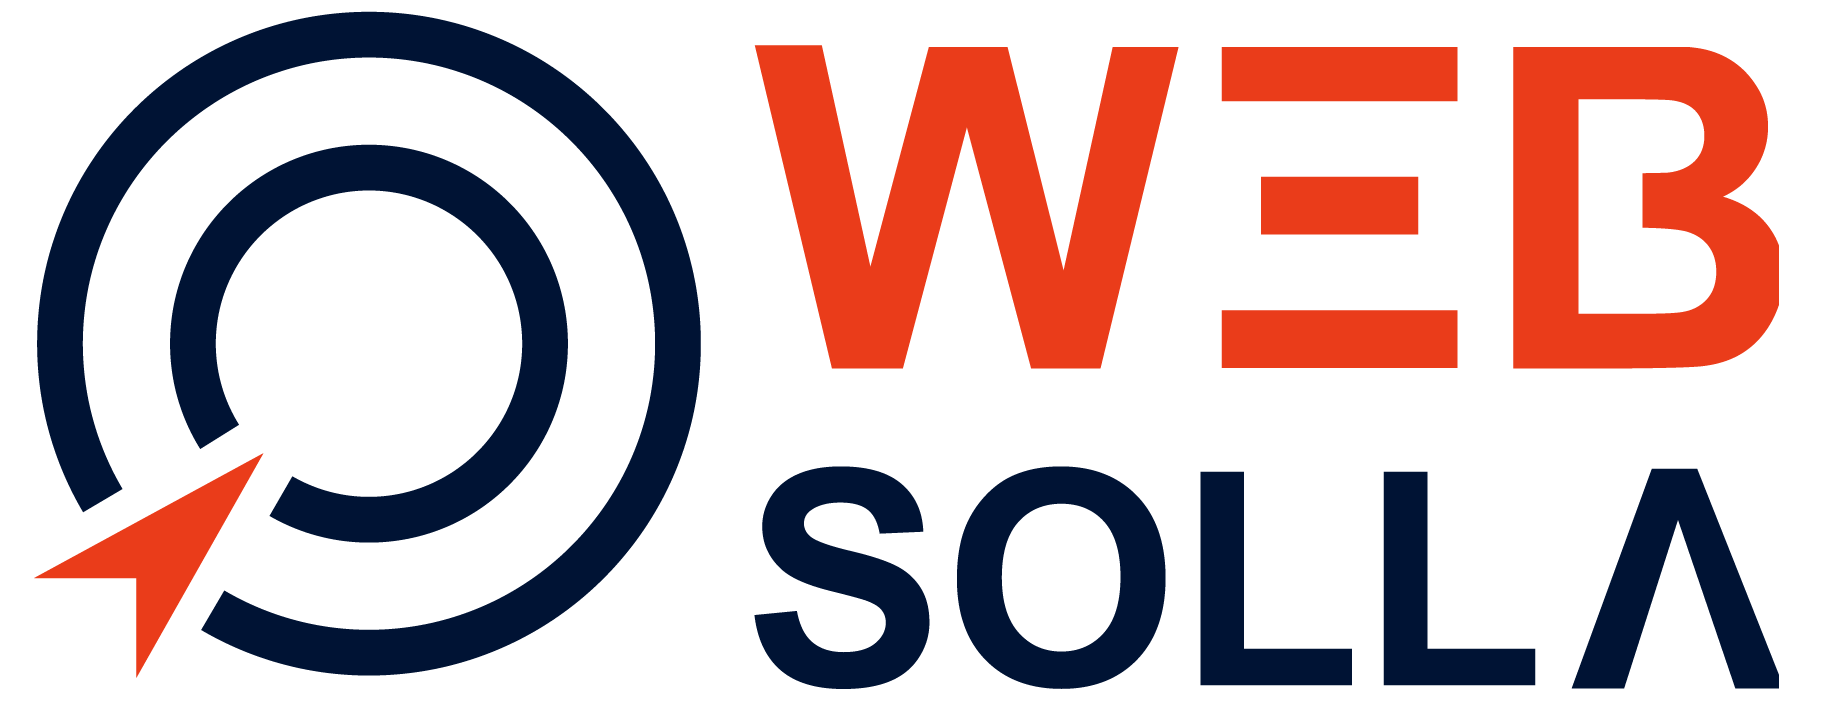 WebSolla logo